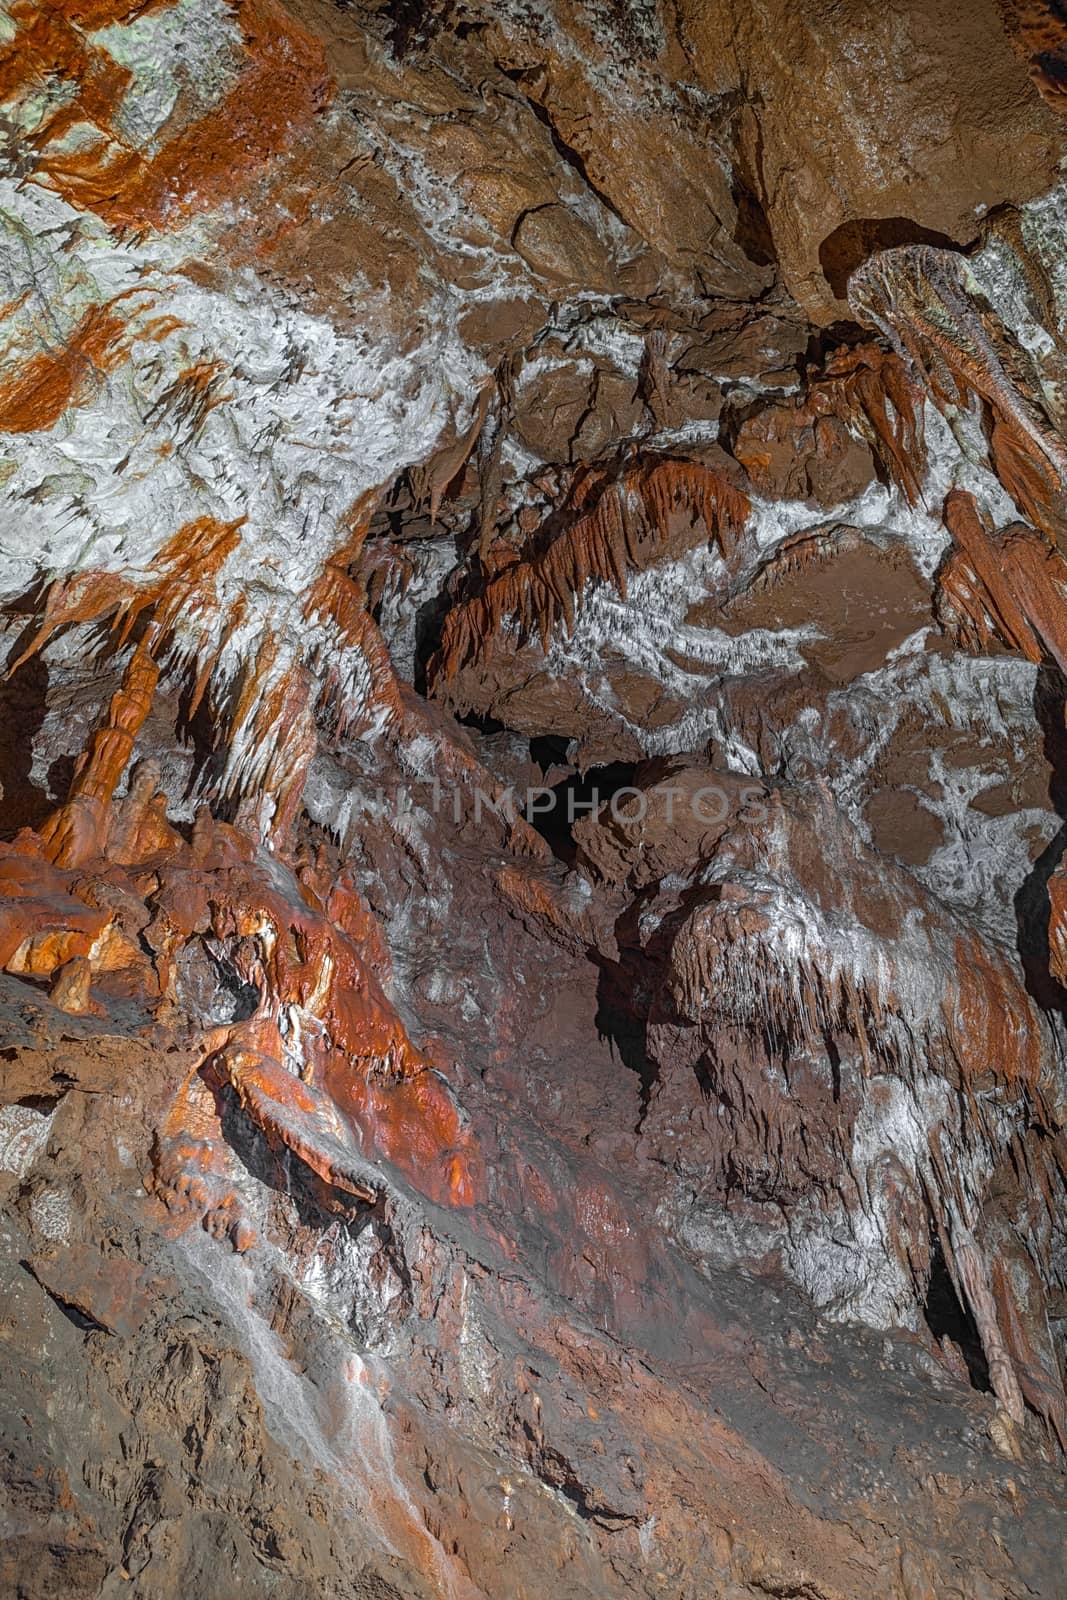 Underground cave texture closeup photo with limestone